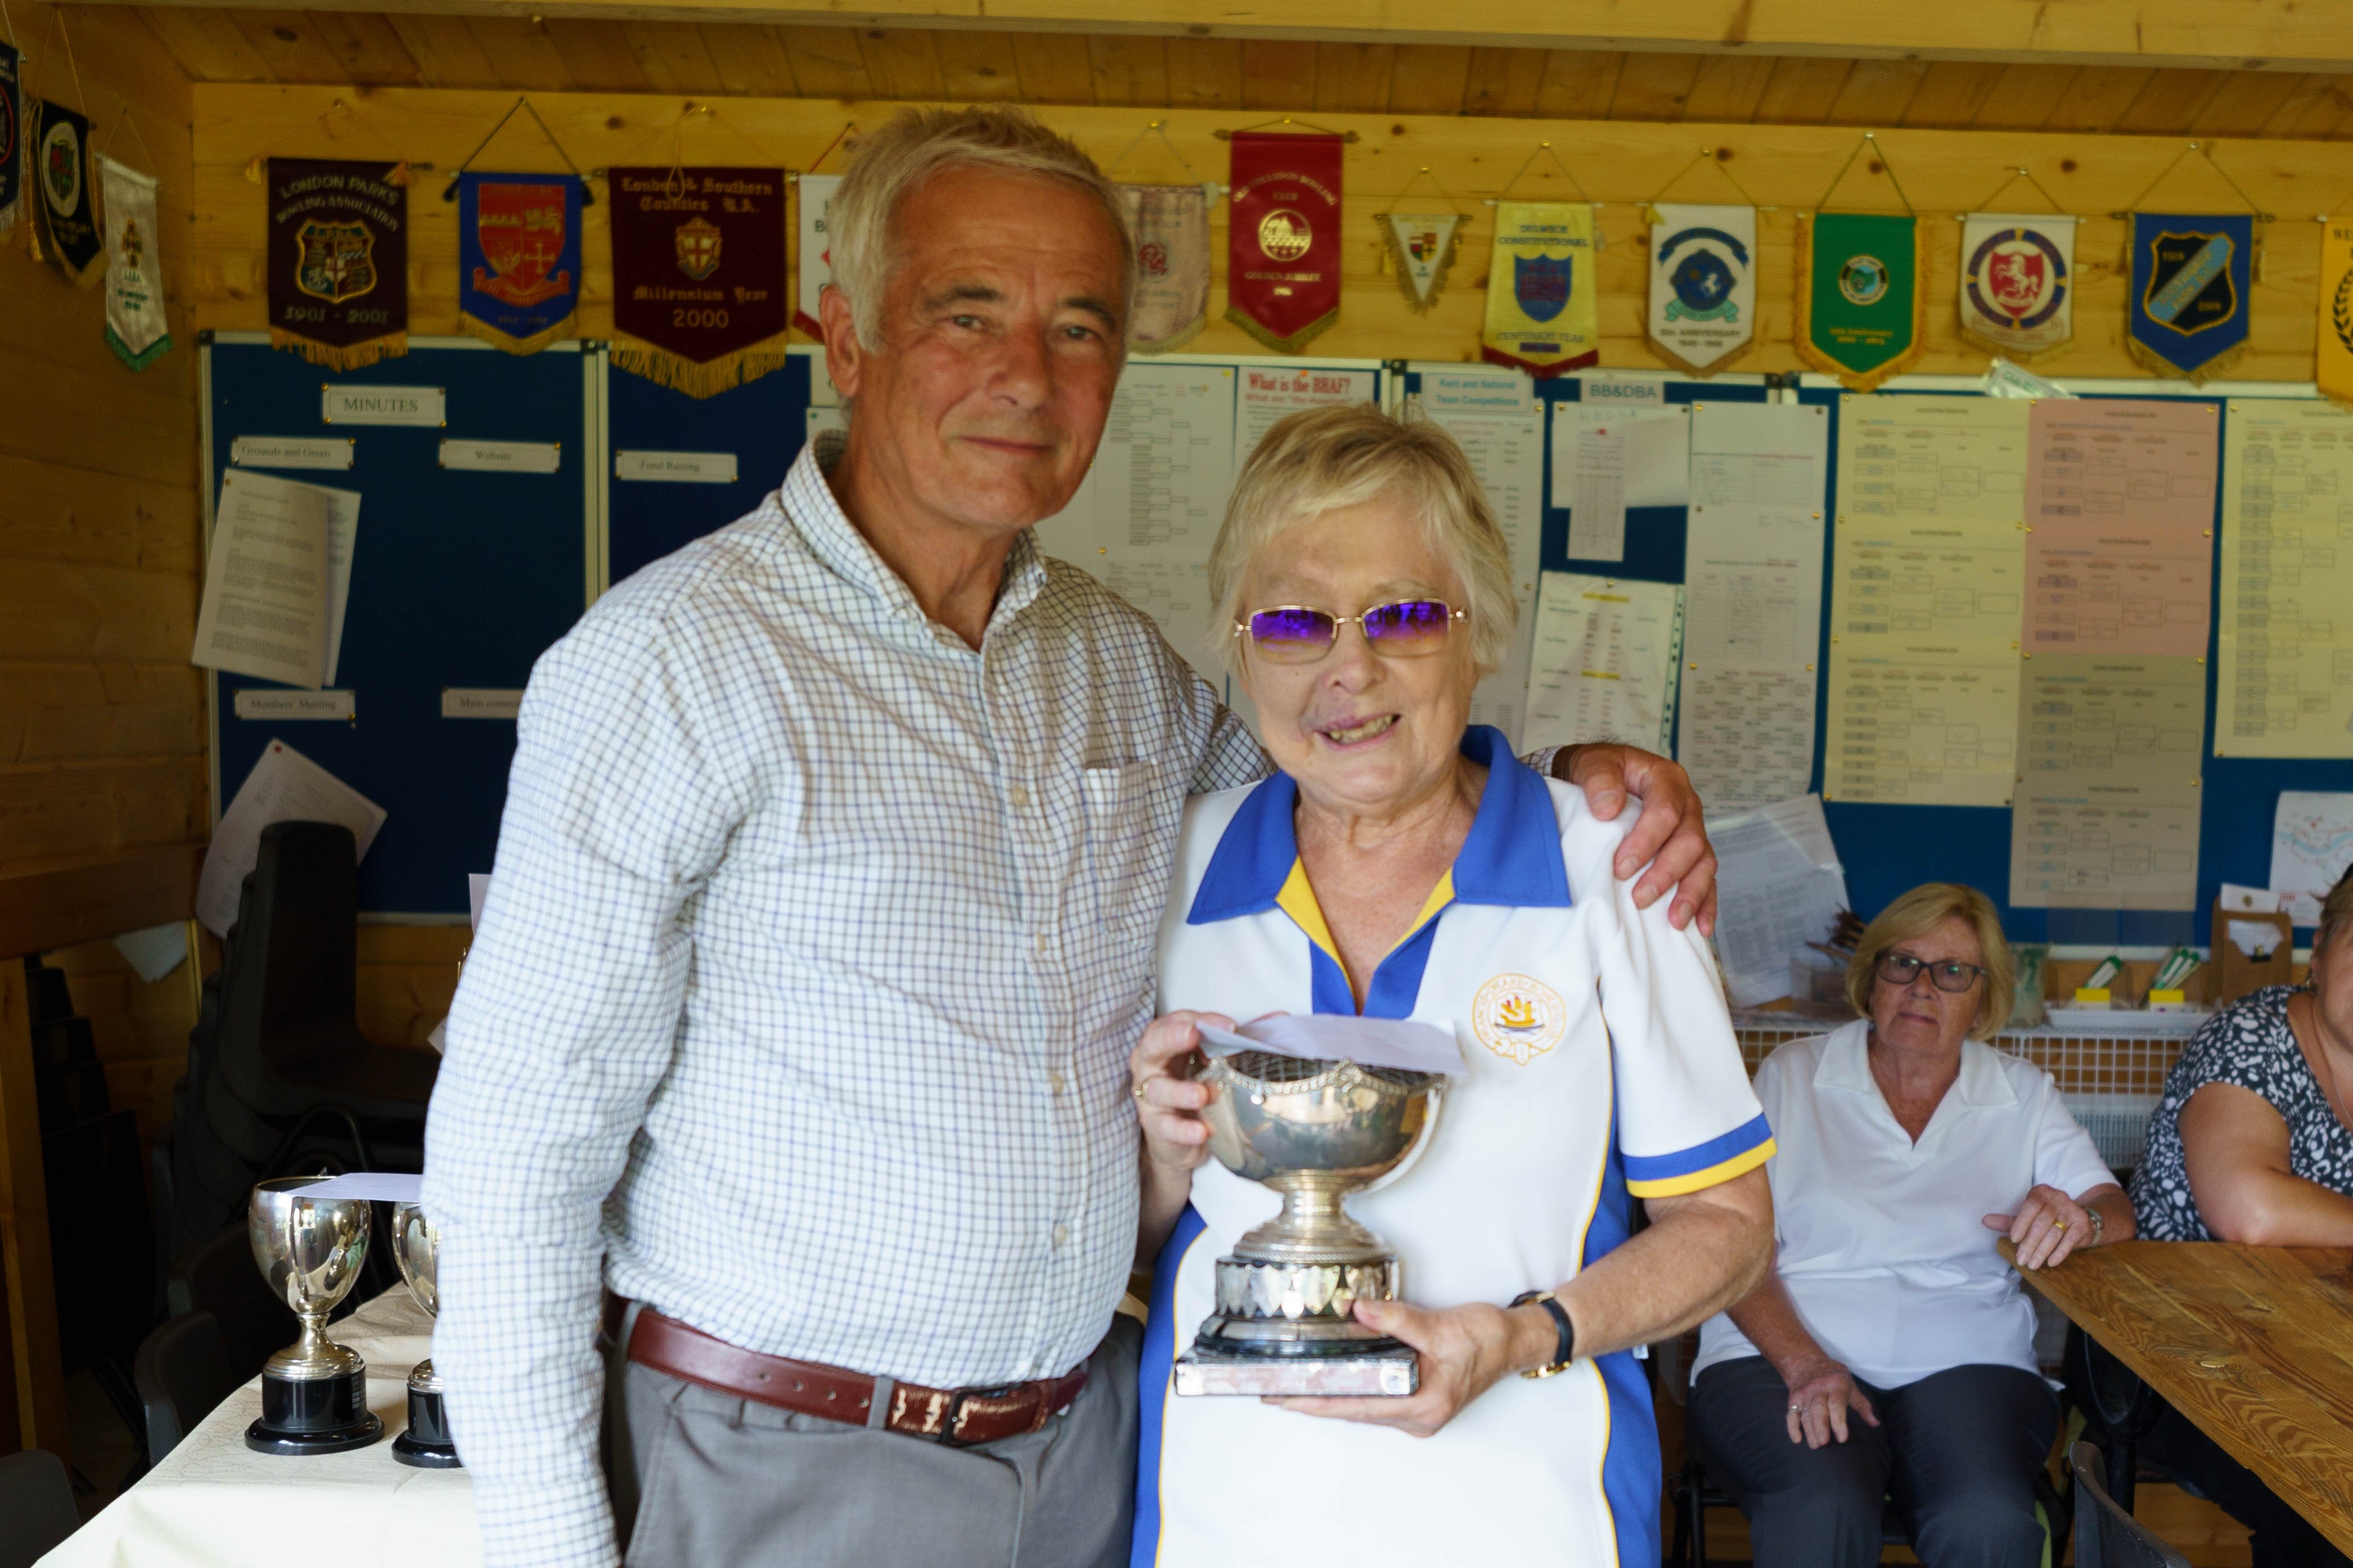 Francis Drake Bowls Club, Hilly Fields, Brockley, SE4 1QE. Ladies Championship, 1st Jill Bonner